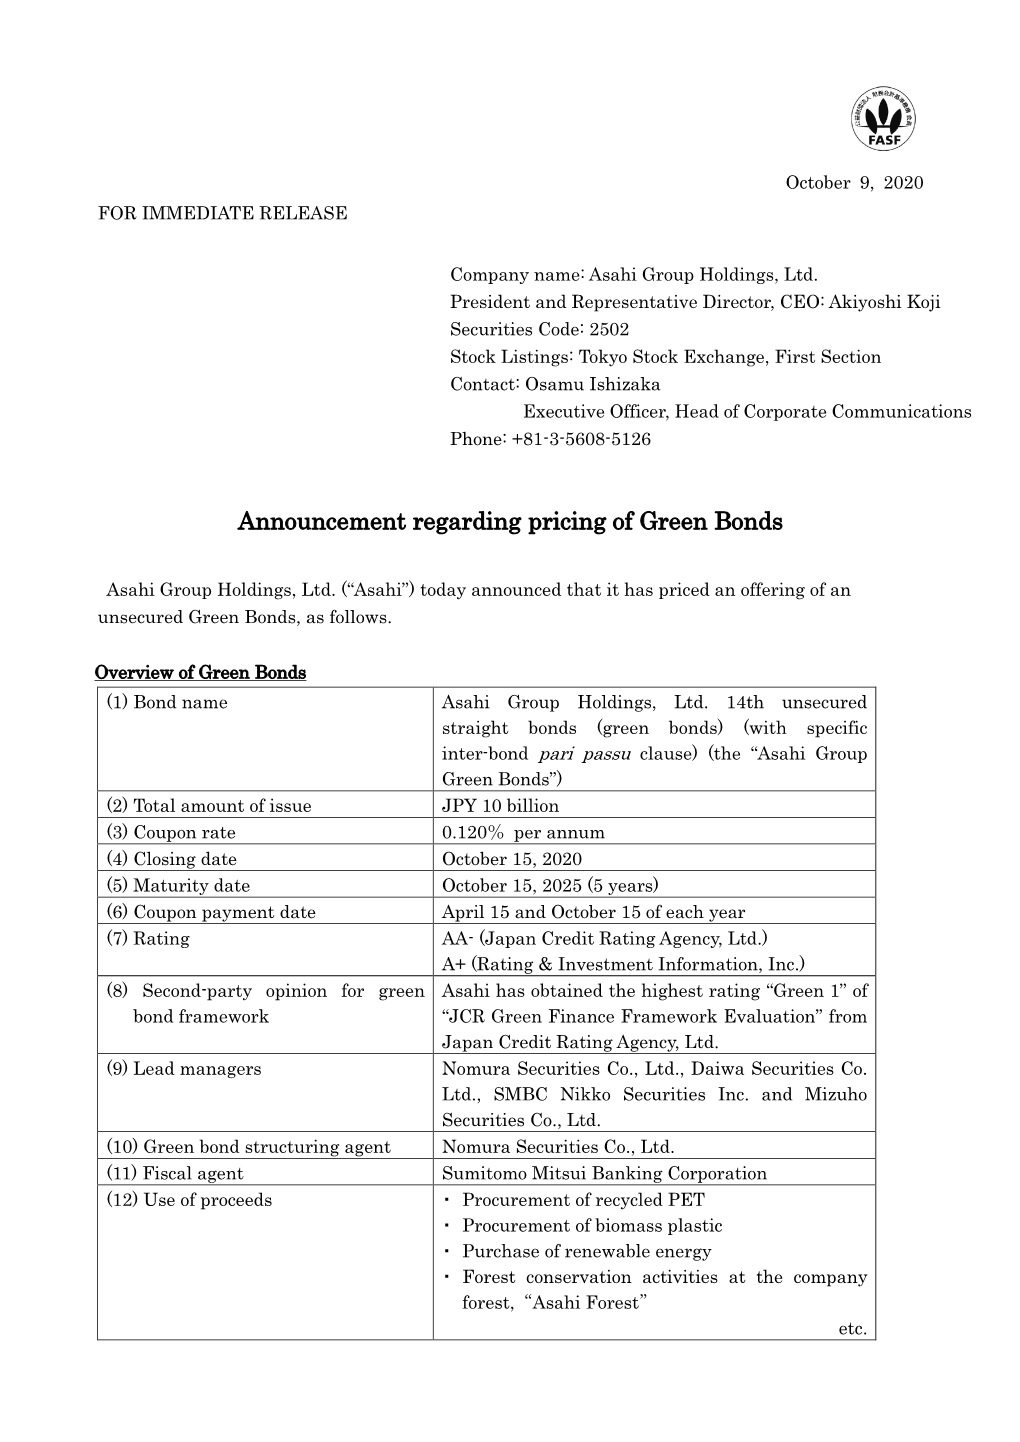 Announcement Regarding Pricing of Green Bonds